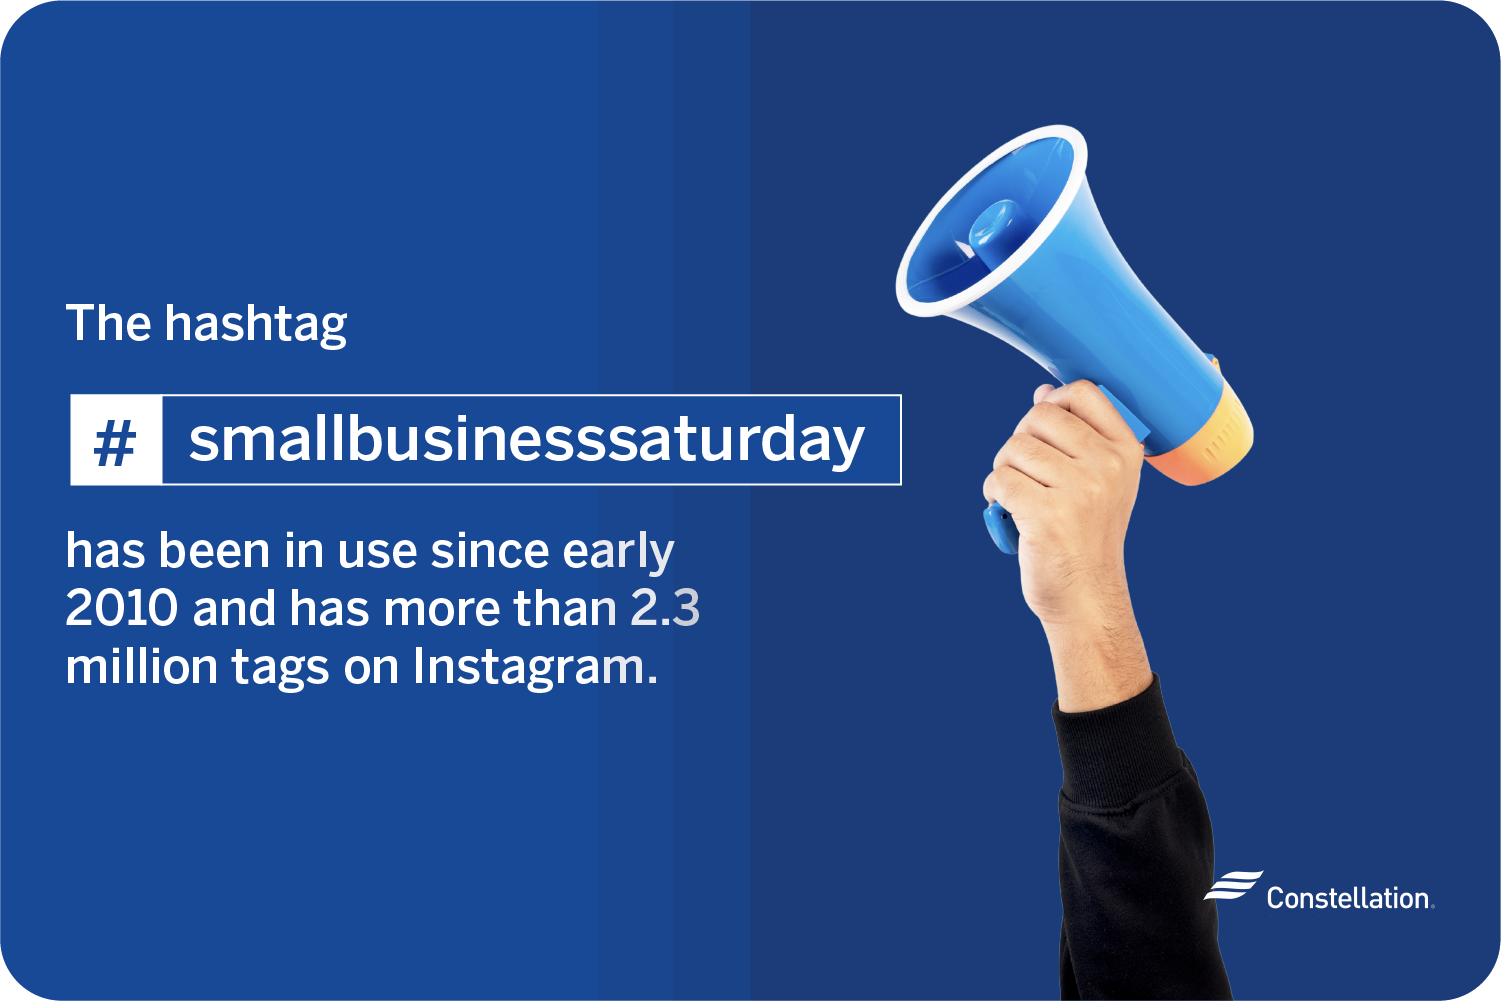 Using the hashtag #smallbusinesssaturday for marketing